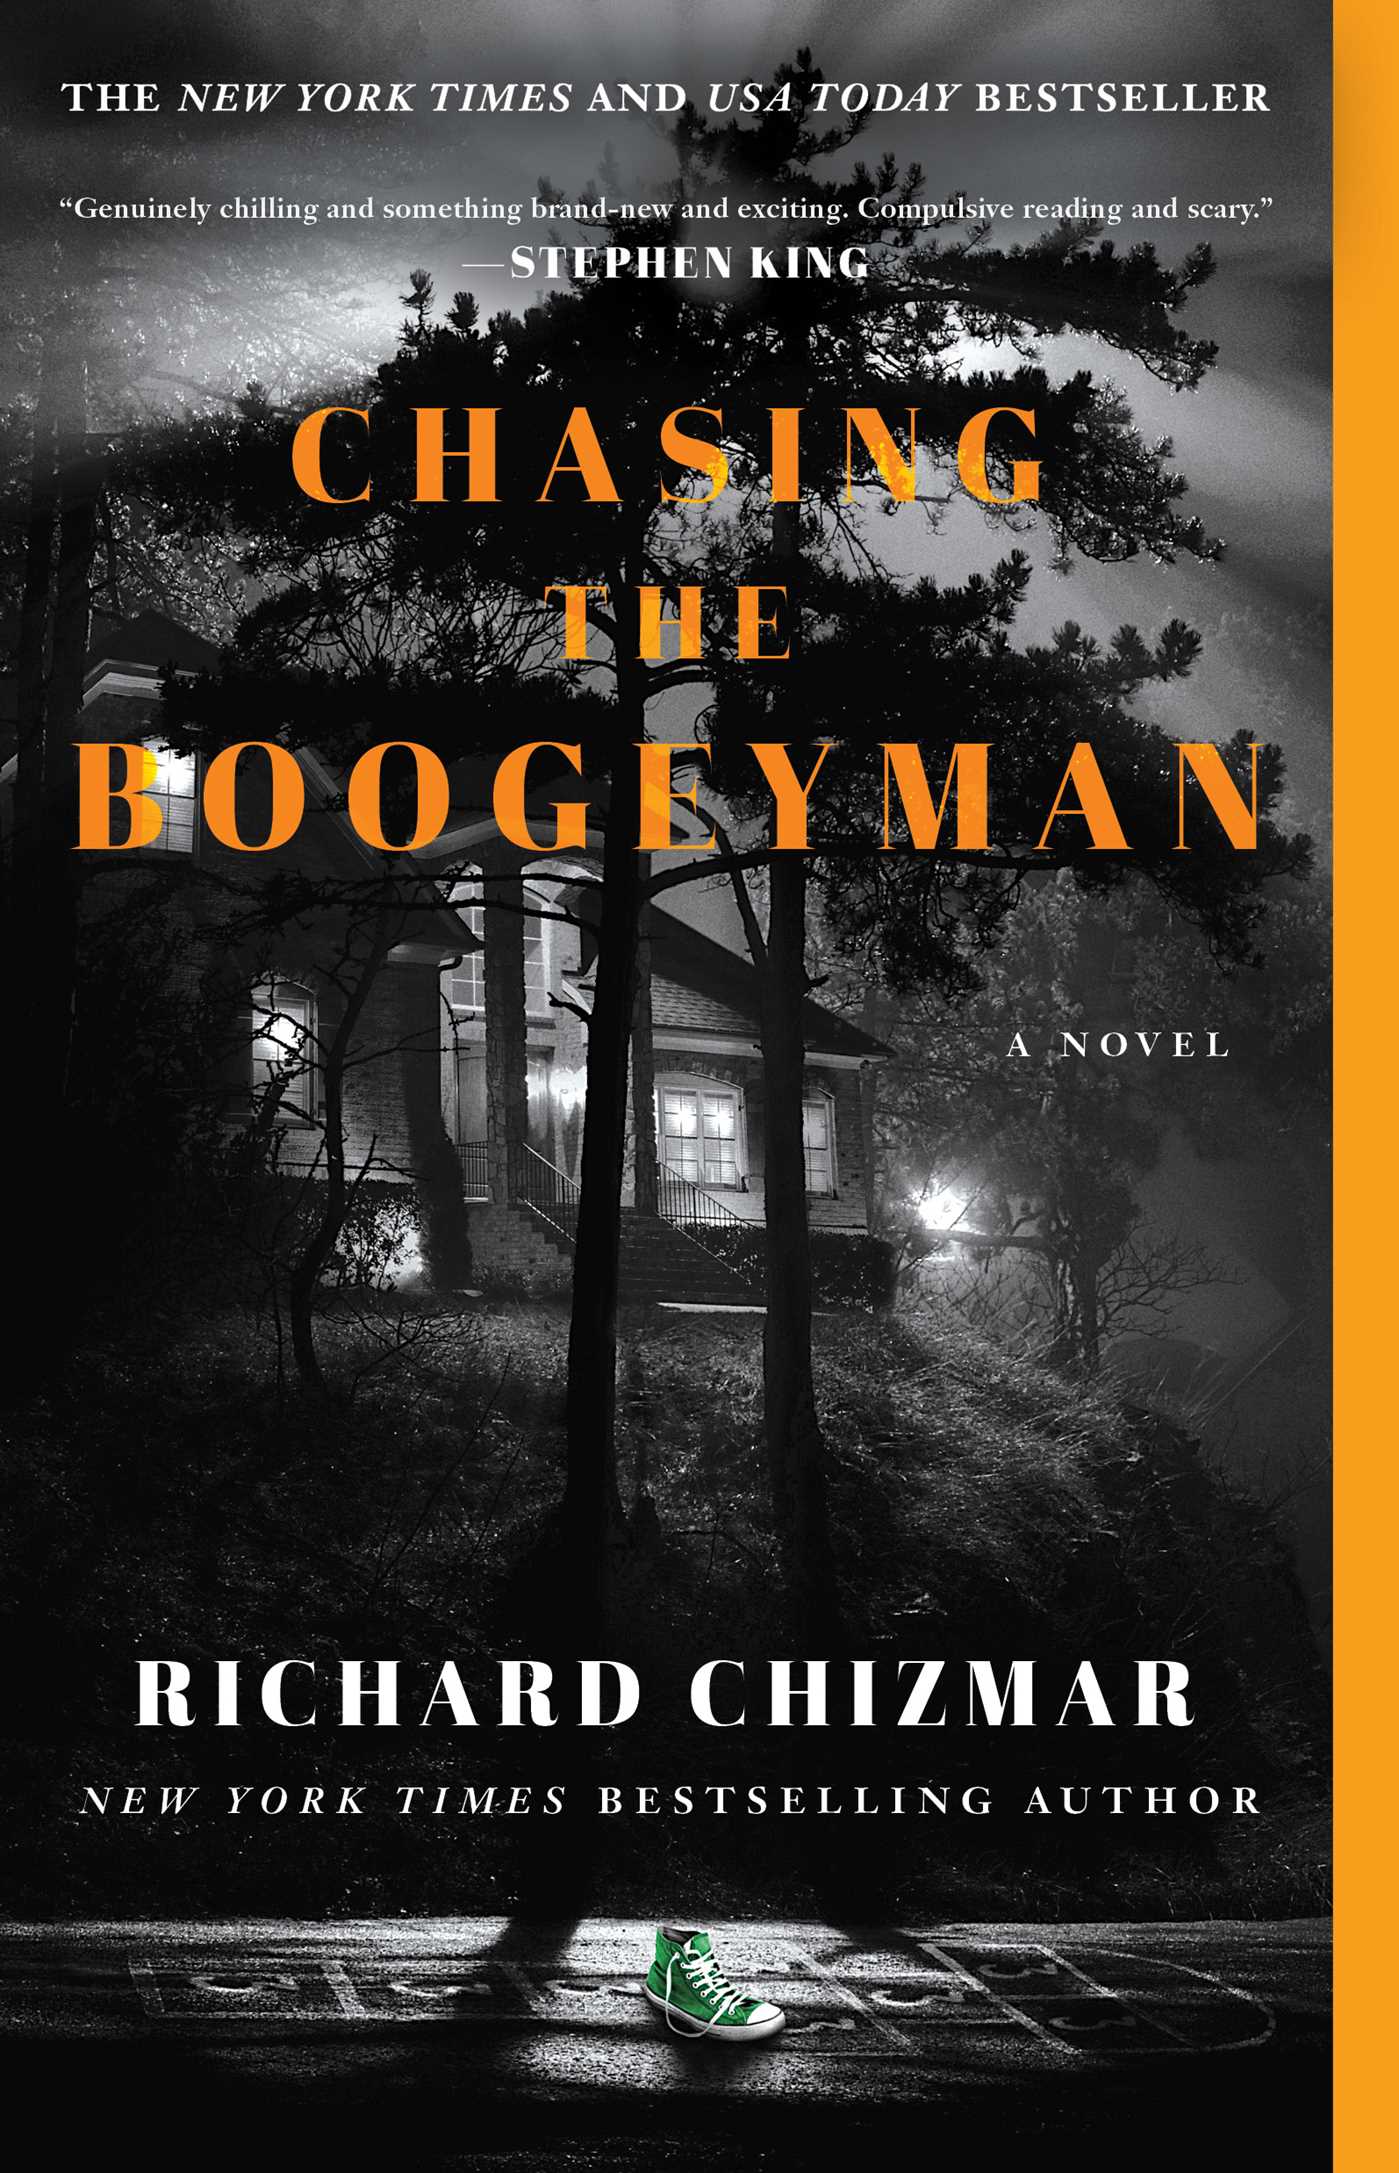 Chasing the Boogeyman books